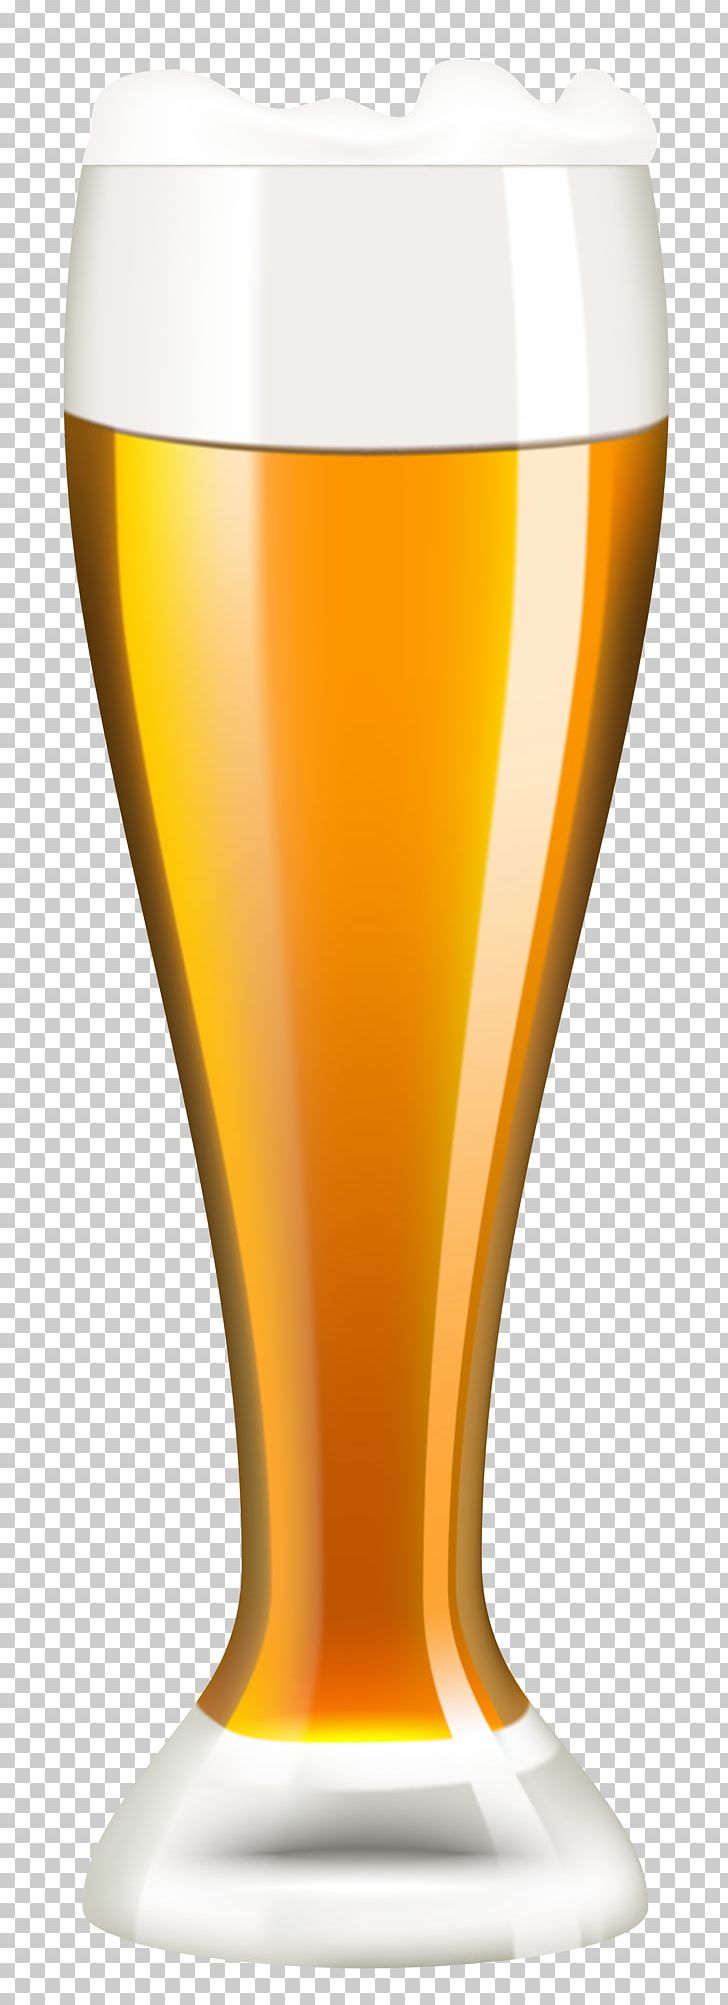 Beer Glassware Cocktail Oktoberfest PNG, Clipart, Beer, Beer Bottle, Beer Glass, Beer Glasses, Beer Glassware Free PNG Download